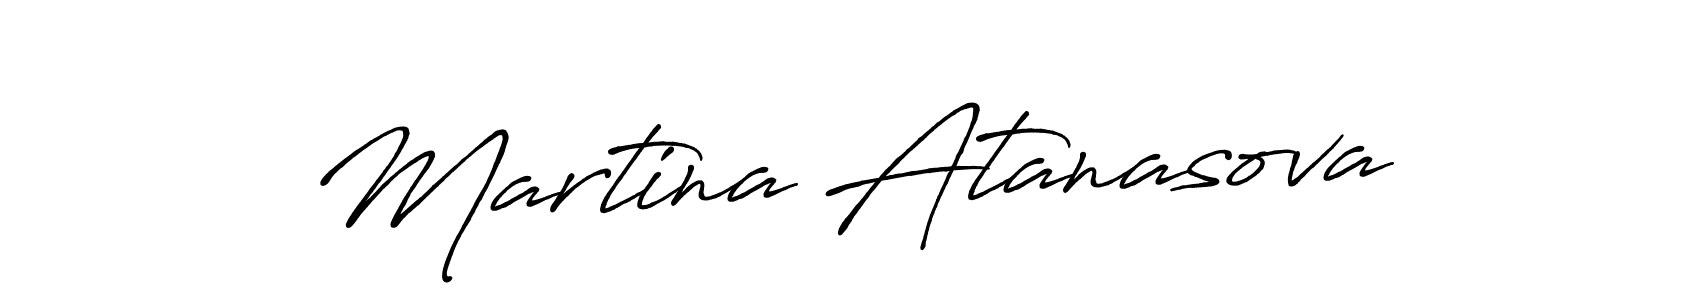 How to Draw Martina Atanasova signature style? Antro_Vectra_Bolder is a latest design signature styles for name Martina Atanasova. Martina Atanasova signature style 7 images and pictures png